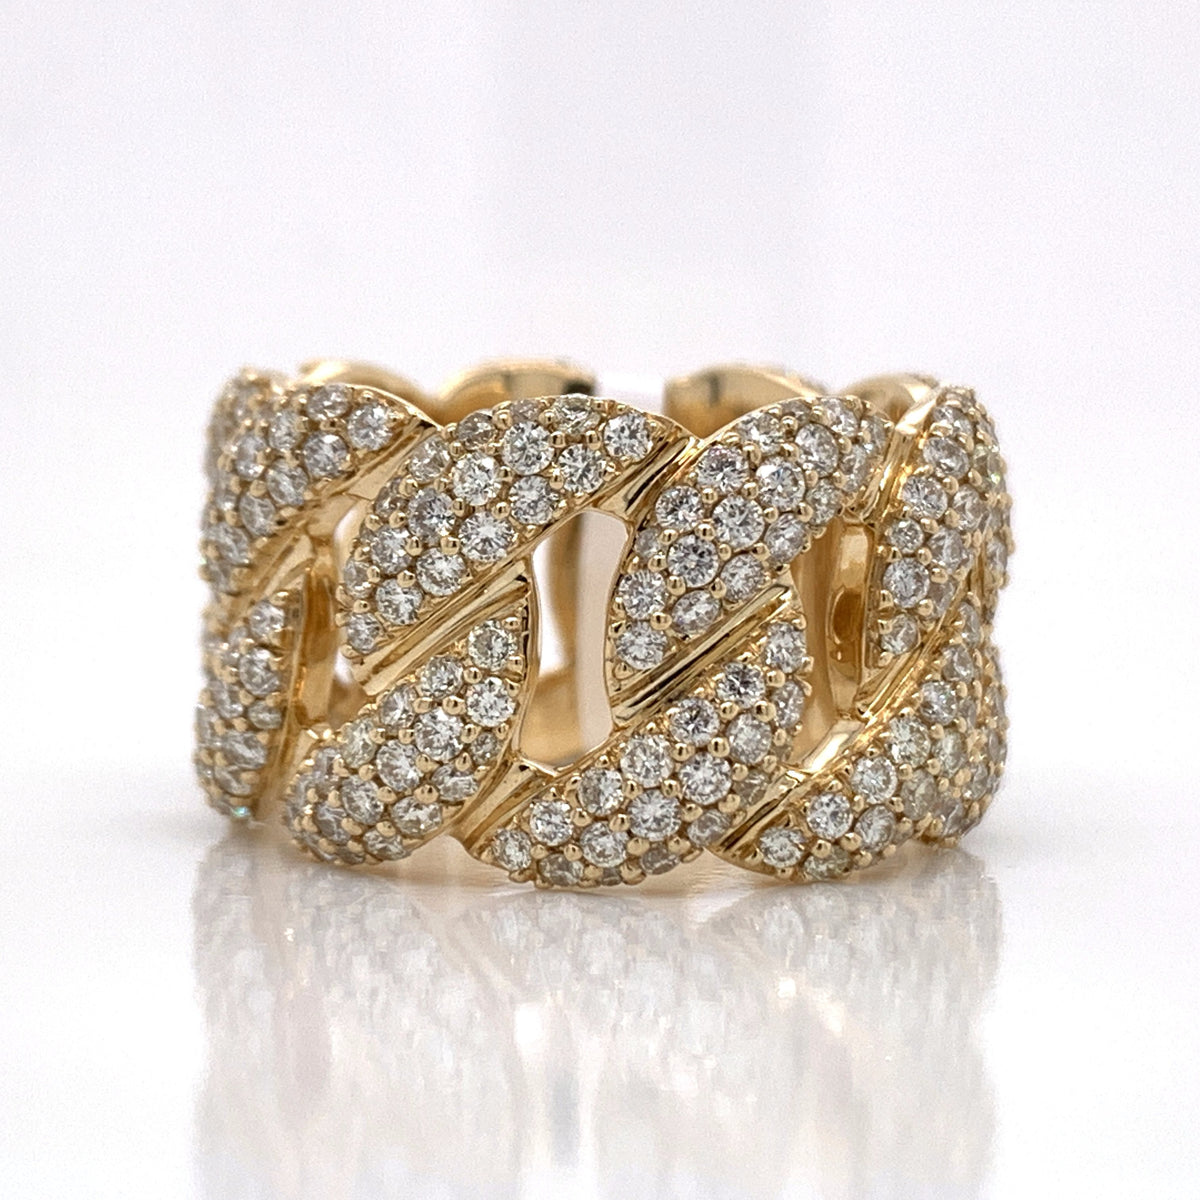 4.00 CT. Diamond 14K Gold Ring - White Carat Diamonds 